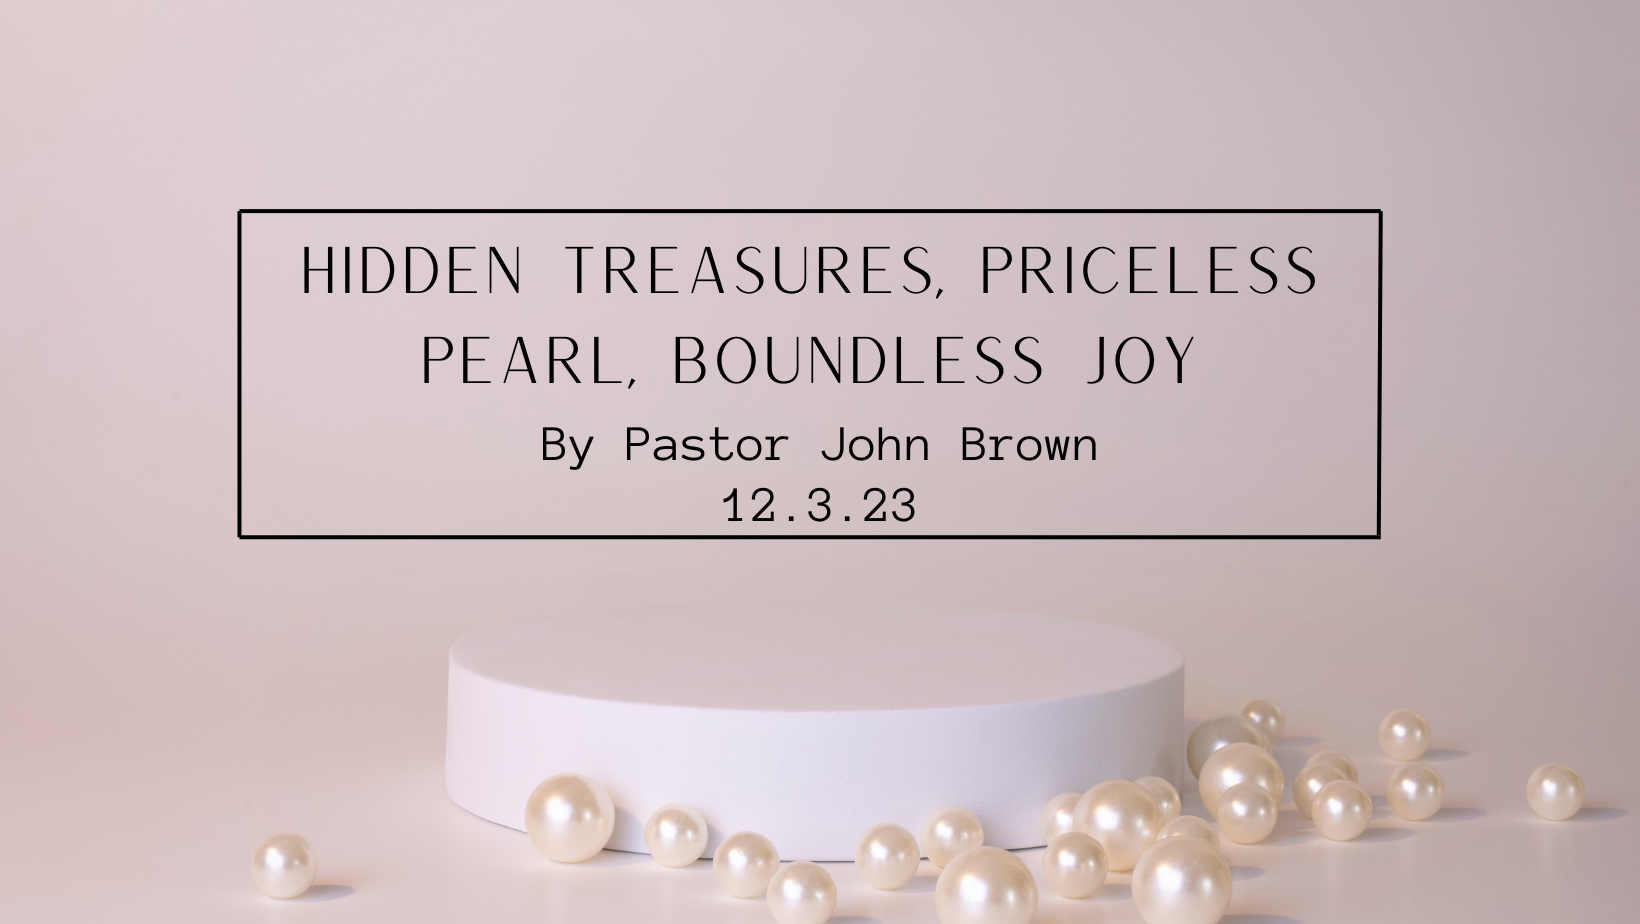 Hidden Treasures, Priceless Pearl, Boundless Joy